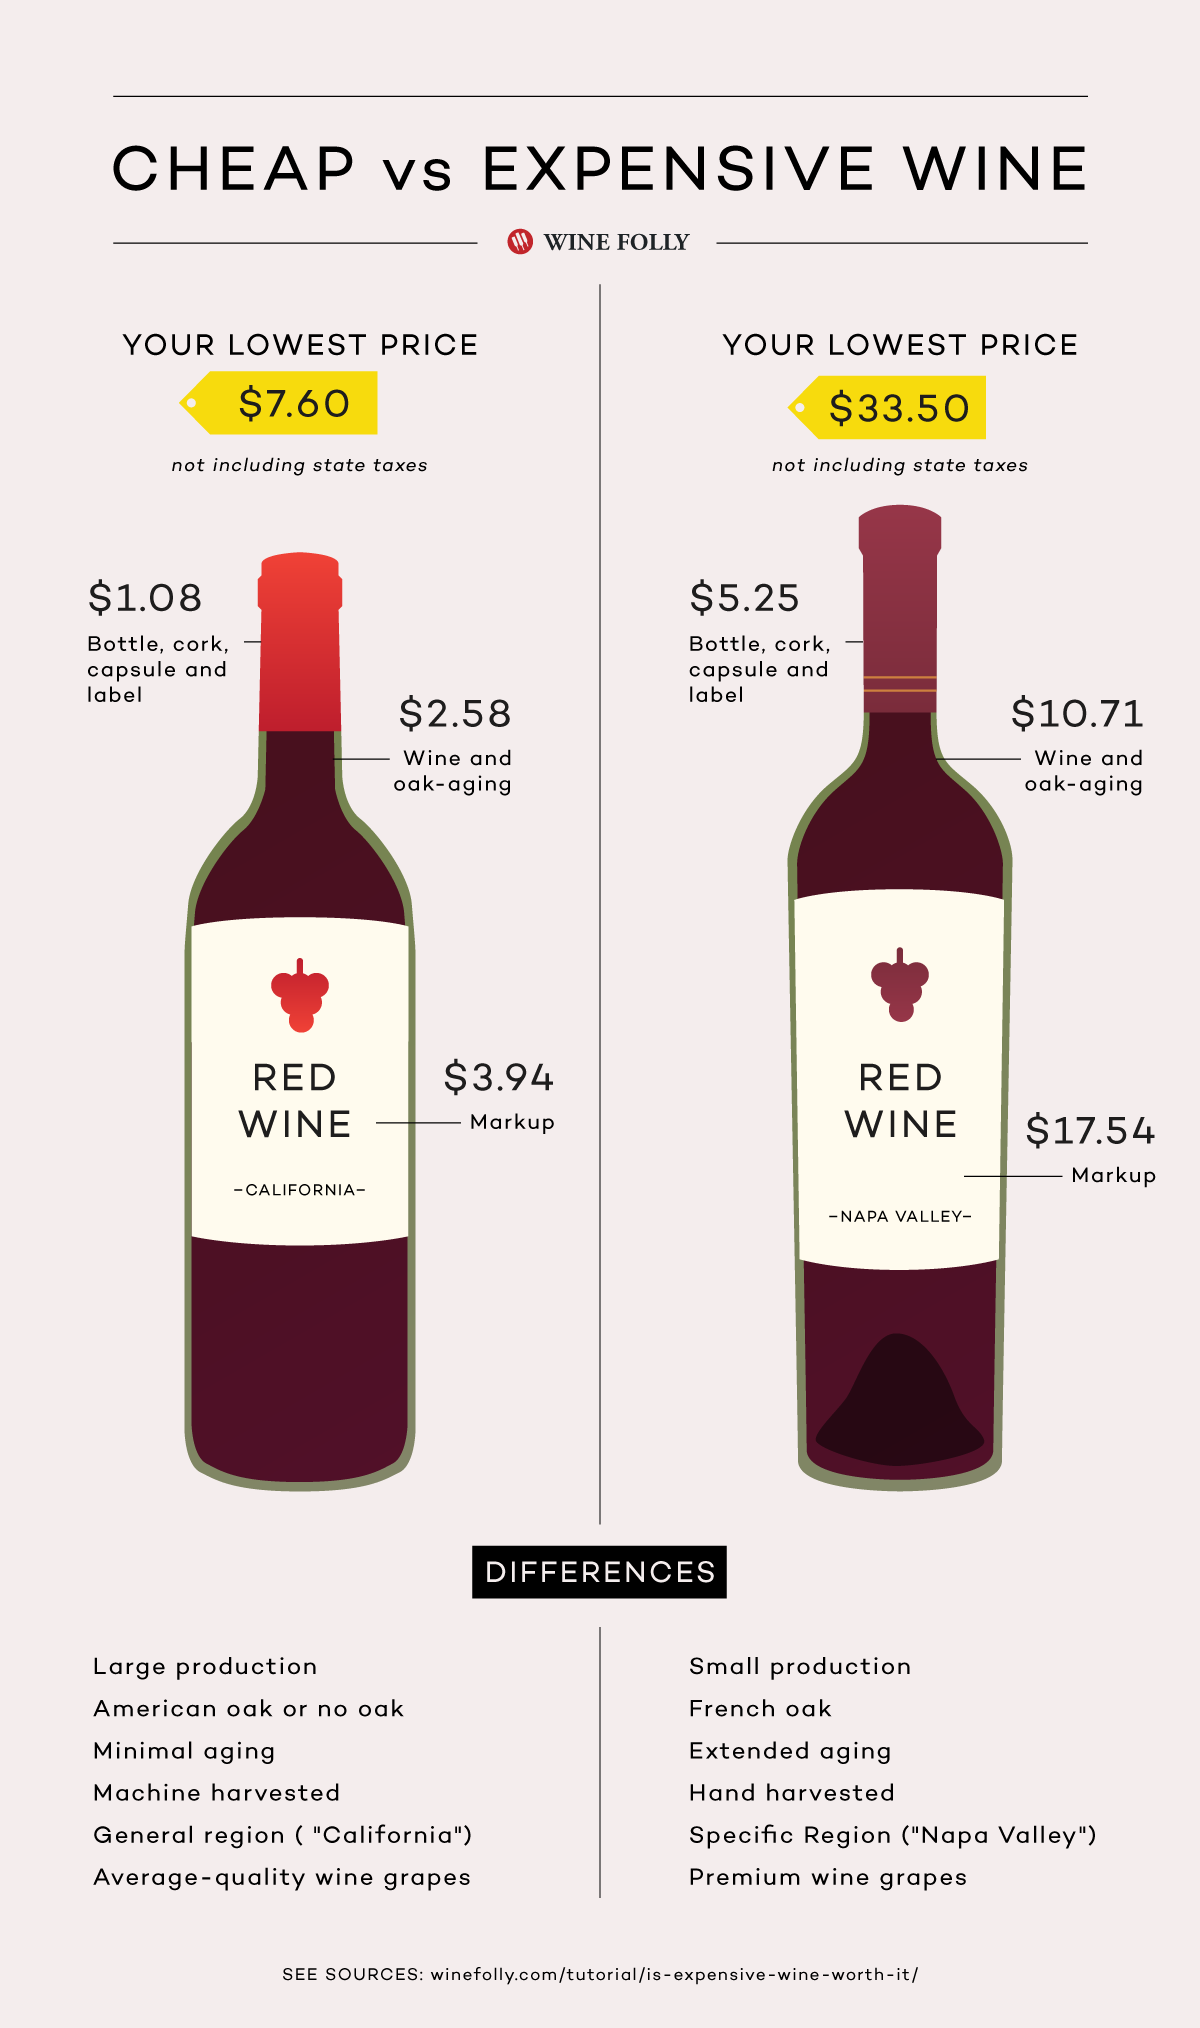 Wine Folly의 저렴한 와인과 비싼 와인 비교